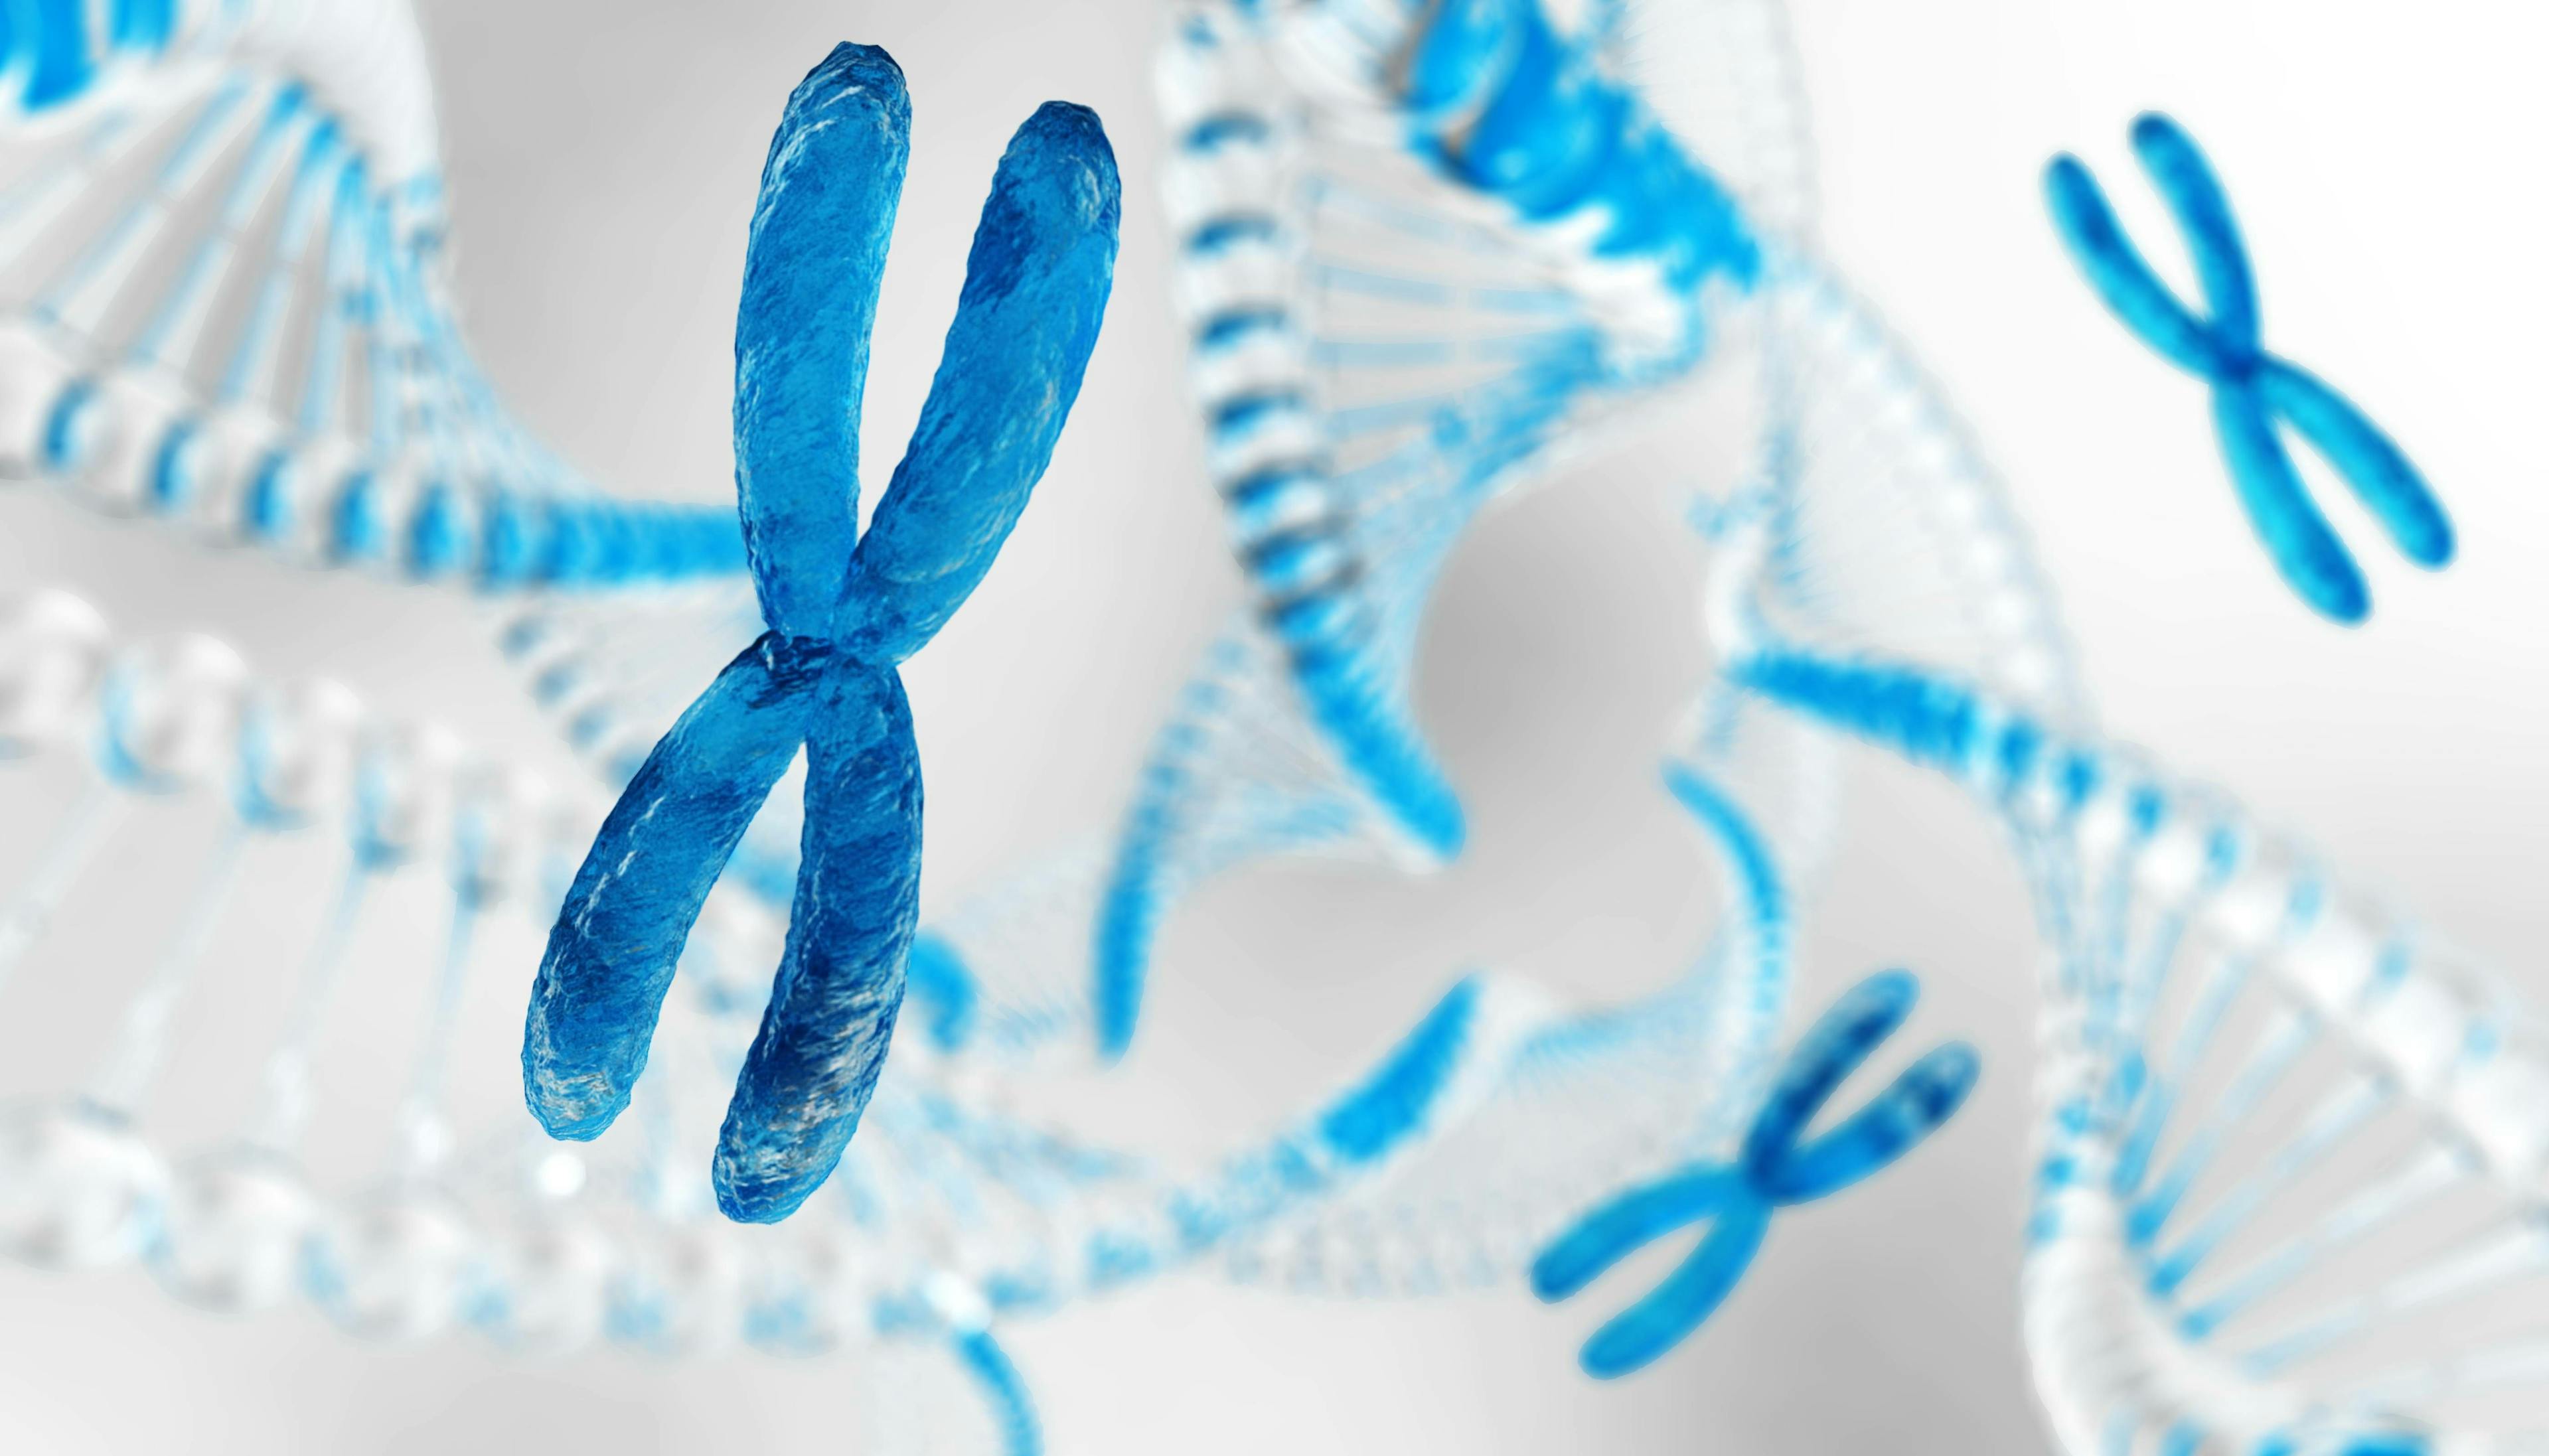 X Chromosome | Image credit: ustas - stock.adobe.com